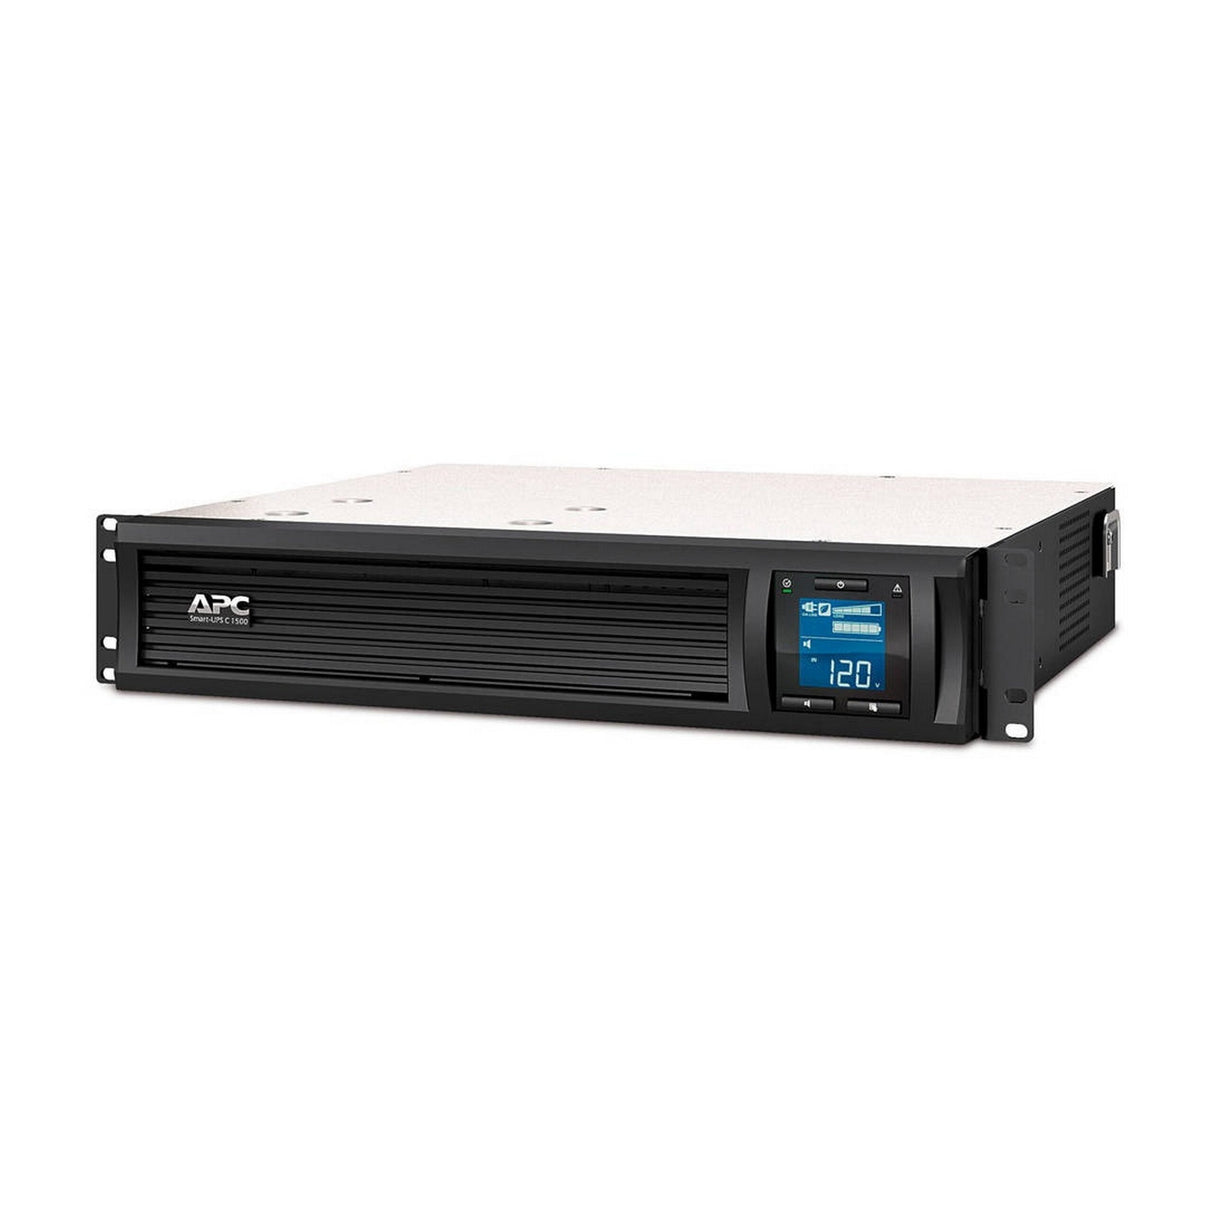 APC SMC1500-2UC Smart UPS 1500VA 2RU with SmartConnect